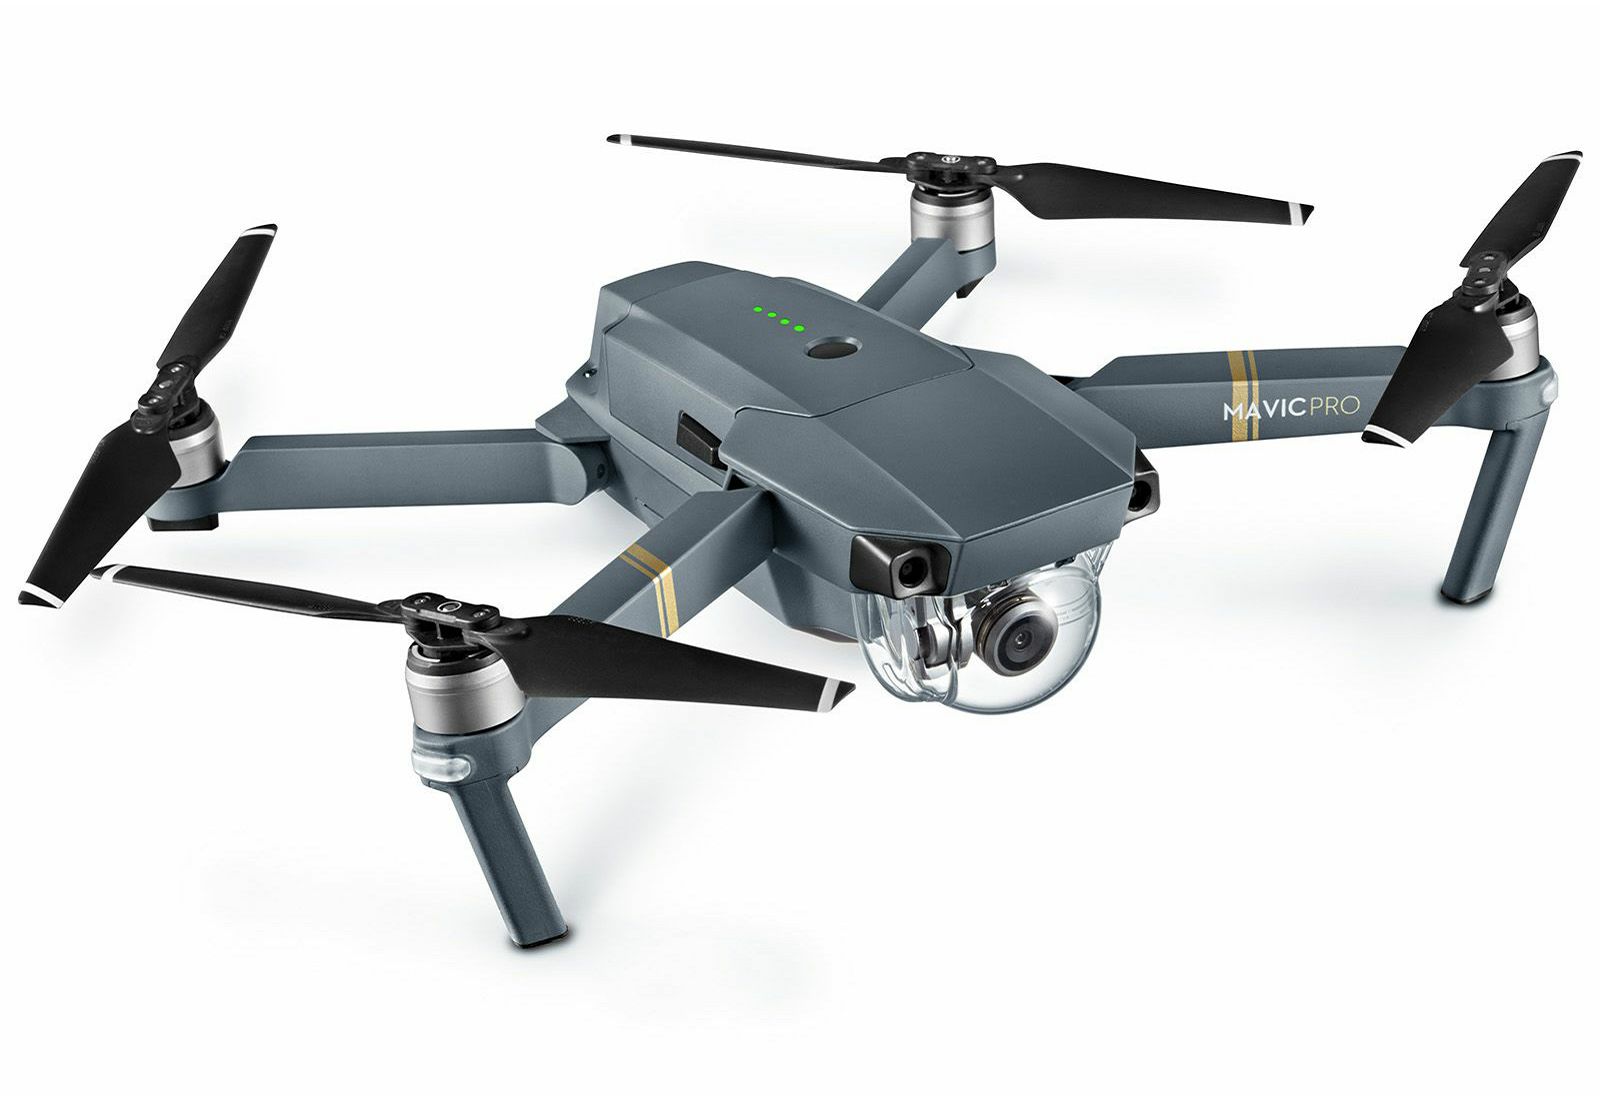 DJI Mavic Pro dron sklopivi quadcopter s 4K kamerom i gimbal stabilizatorom za snimanje iz zraka